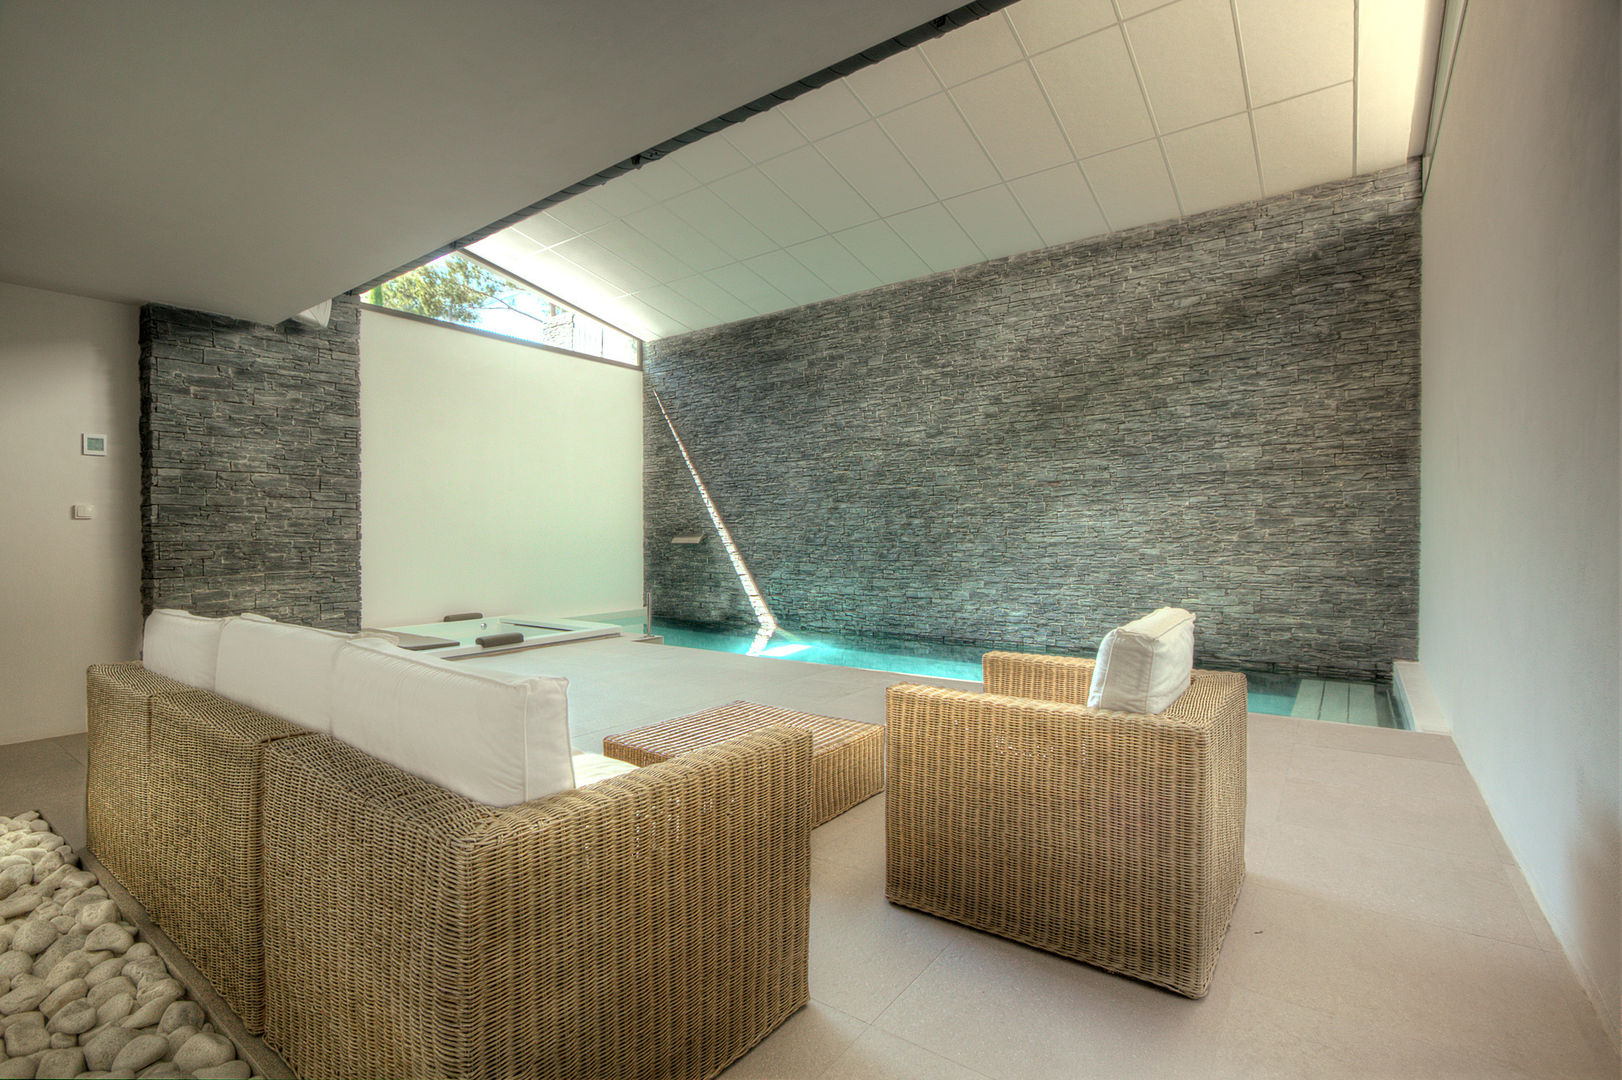 Piscina interior cubierta con spa, Gunitec Concept Pools Gunitec Concept Pools Home Pool